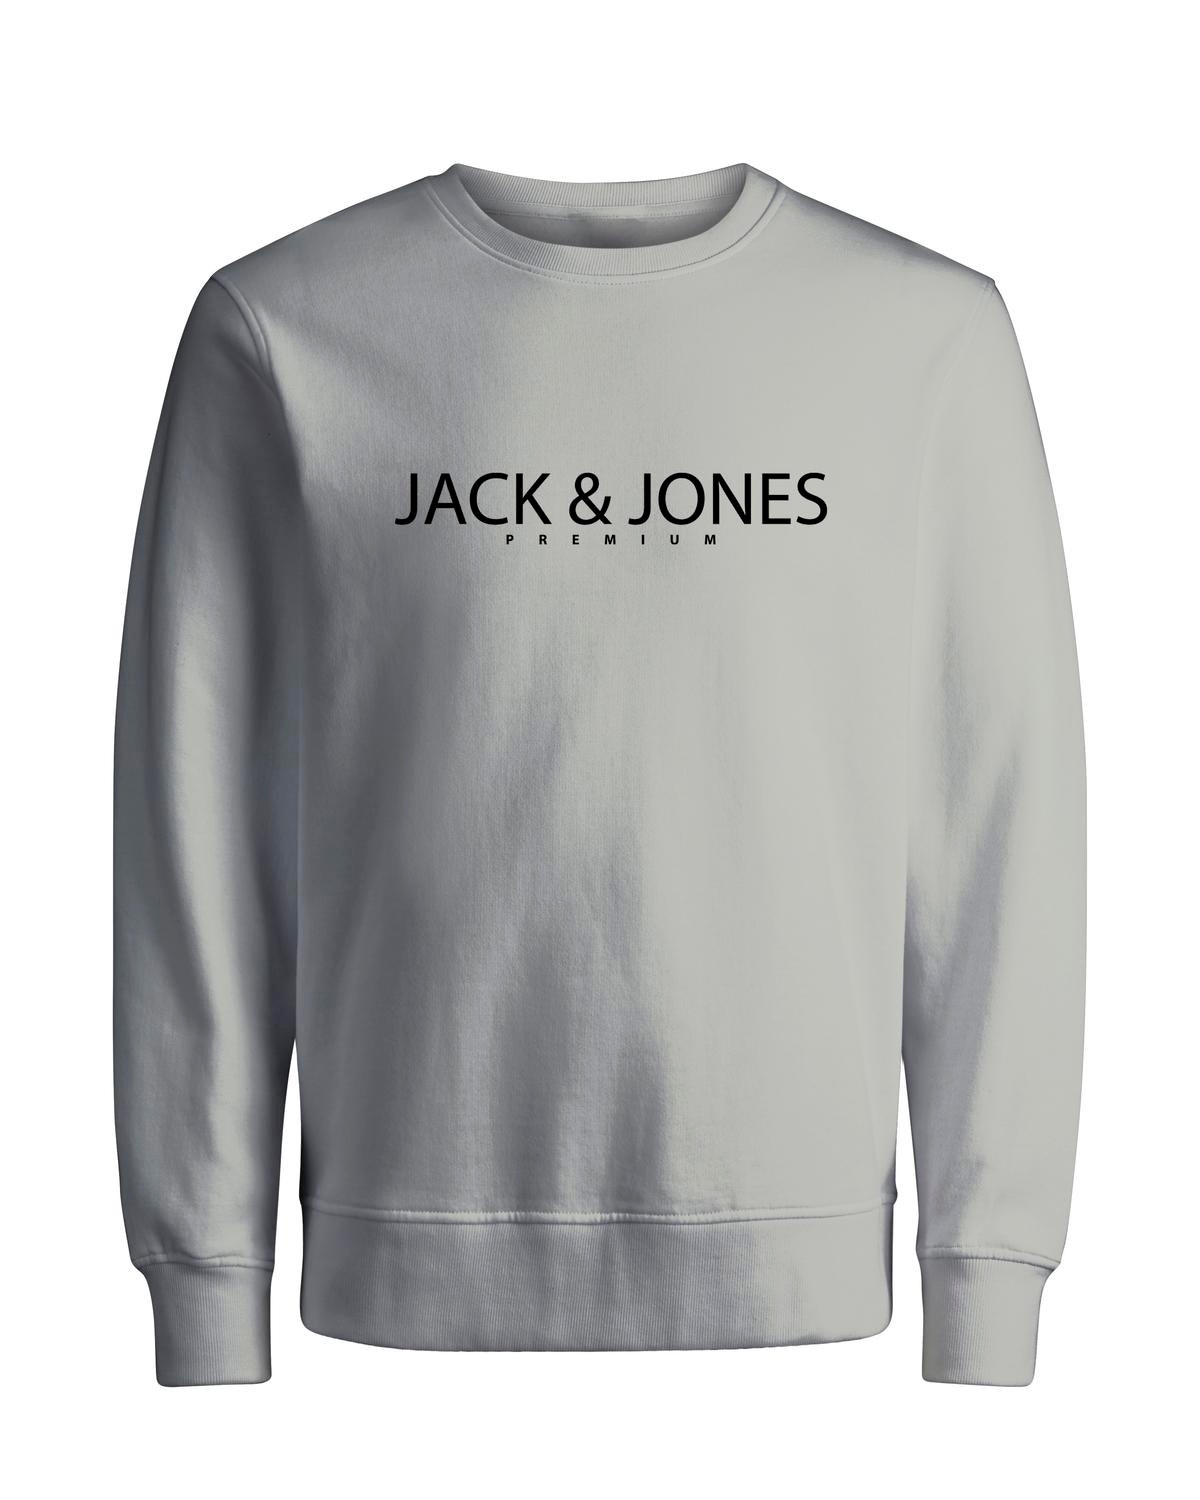 Jack & Jones Printed Crewn Neck Sweatshirt -Green Tint - 12256972